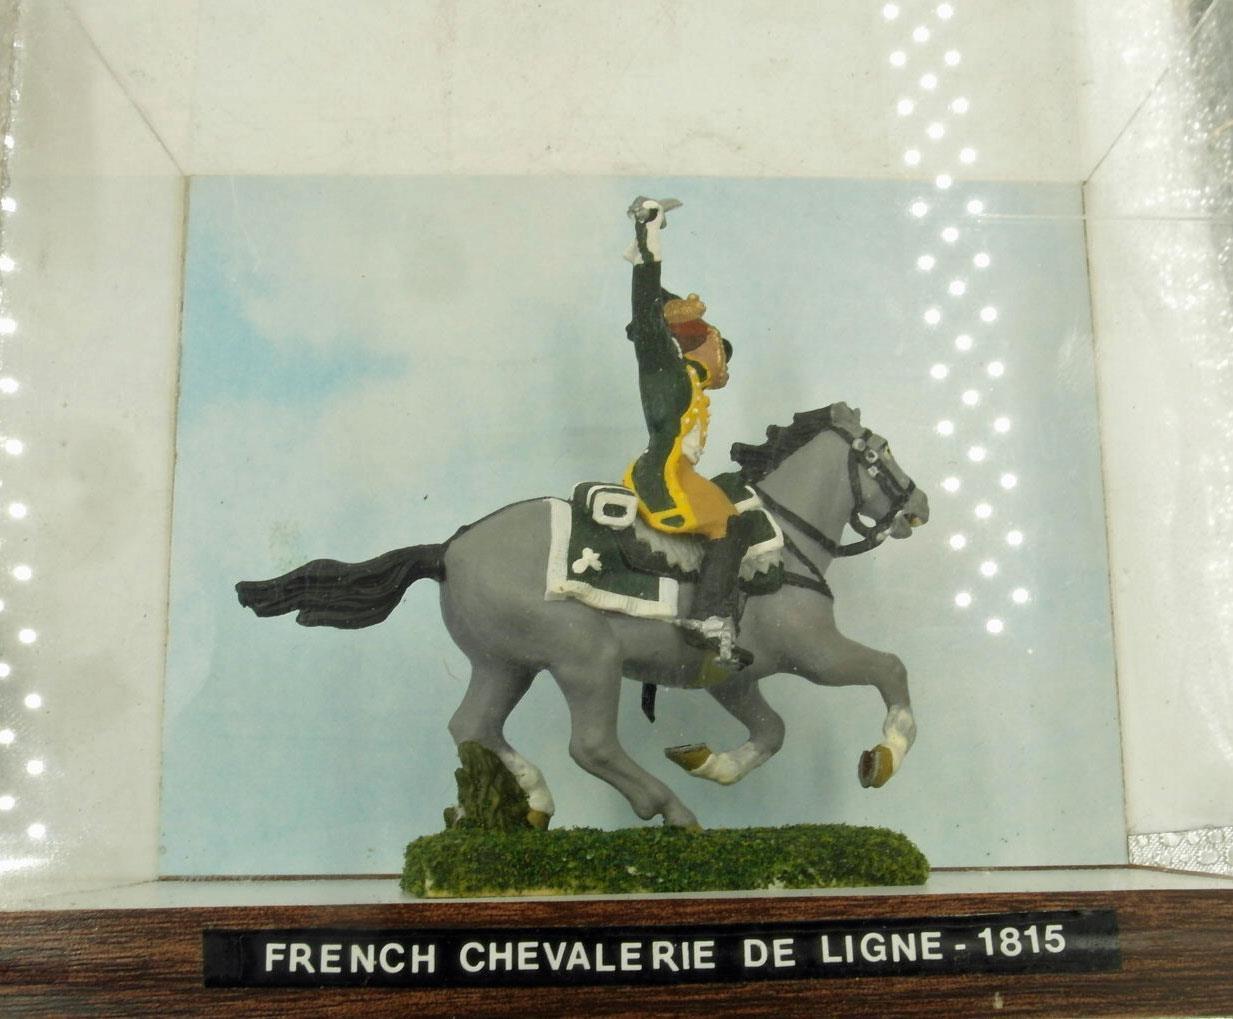 Napoleonic Wars French Chevalierie de Ligne  Mounted Soldier Plexiglass Display